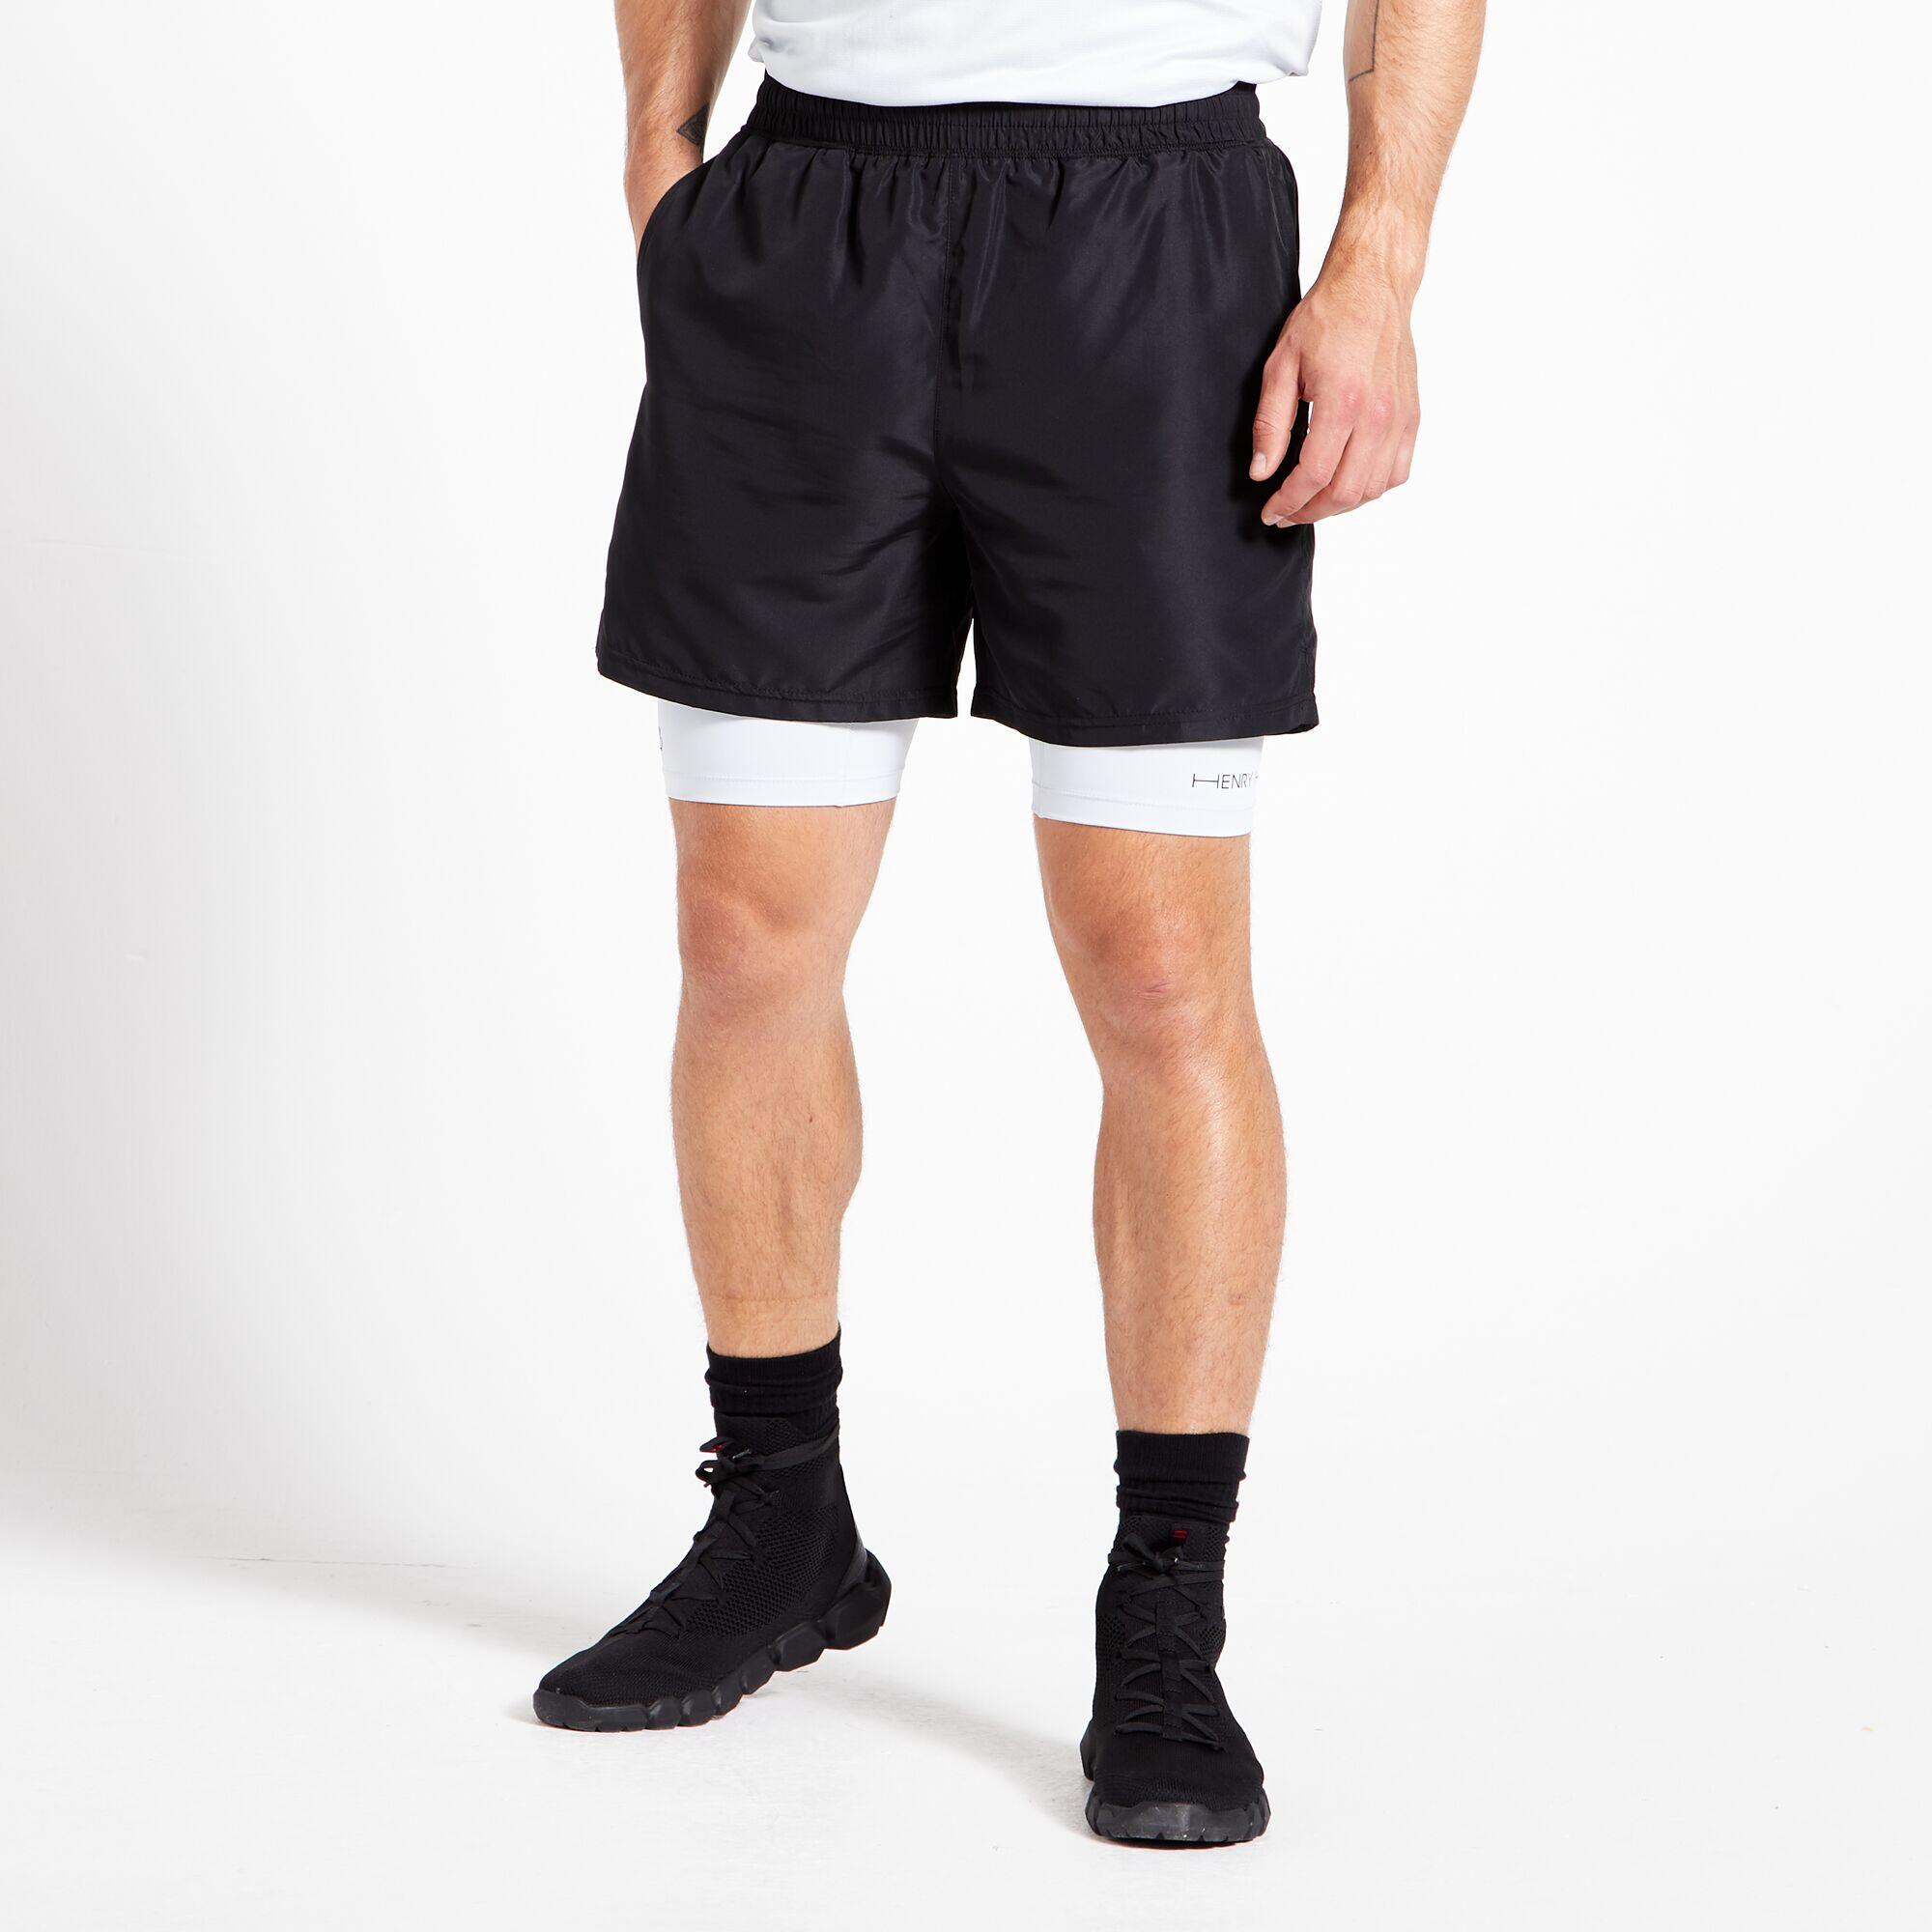 Henry Holland Psych Up Mens Gym Training Shorts - Black 2/5